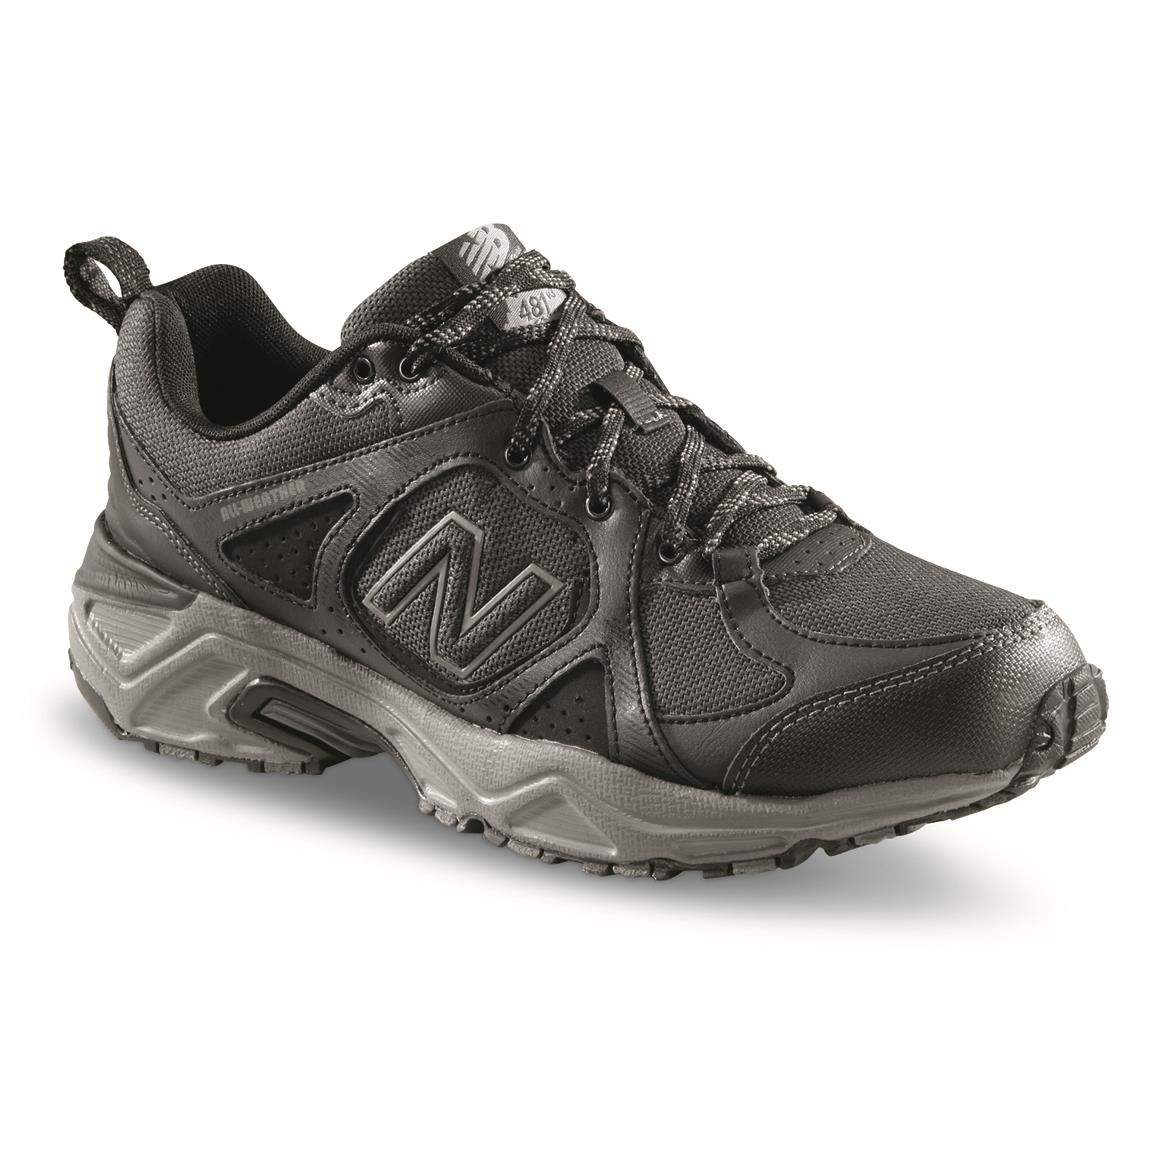 New Balance Men's 481v3 Water Resistant Trail Shoes, Black